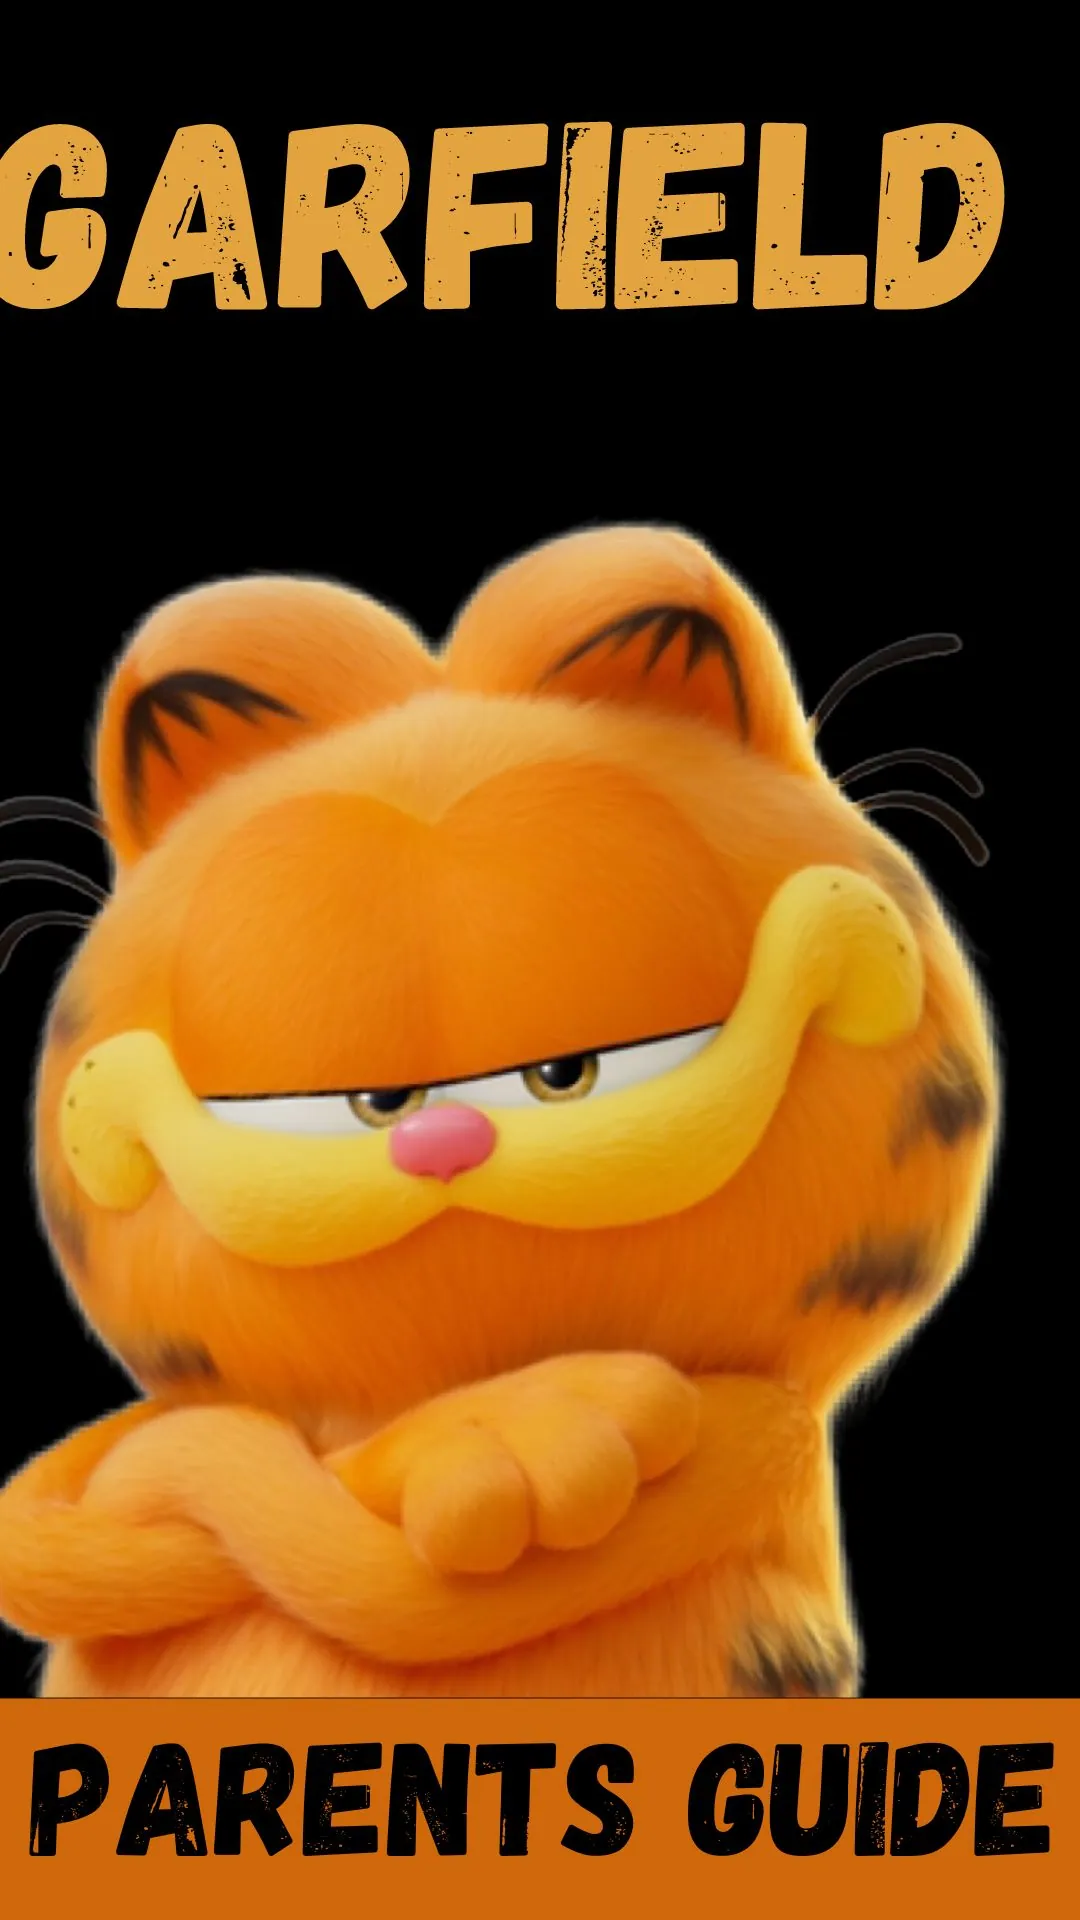 Garfield Parents Guide (1)